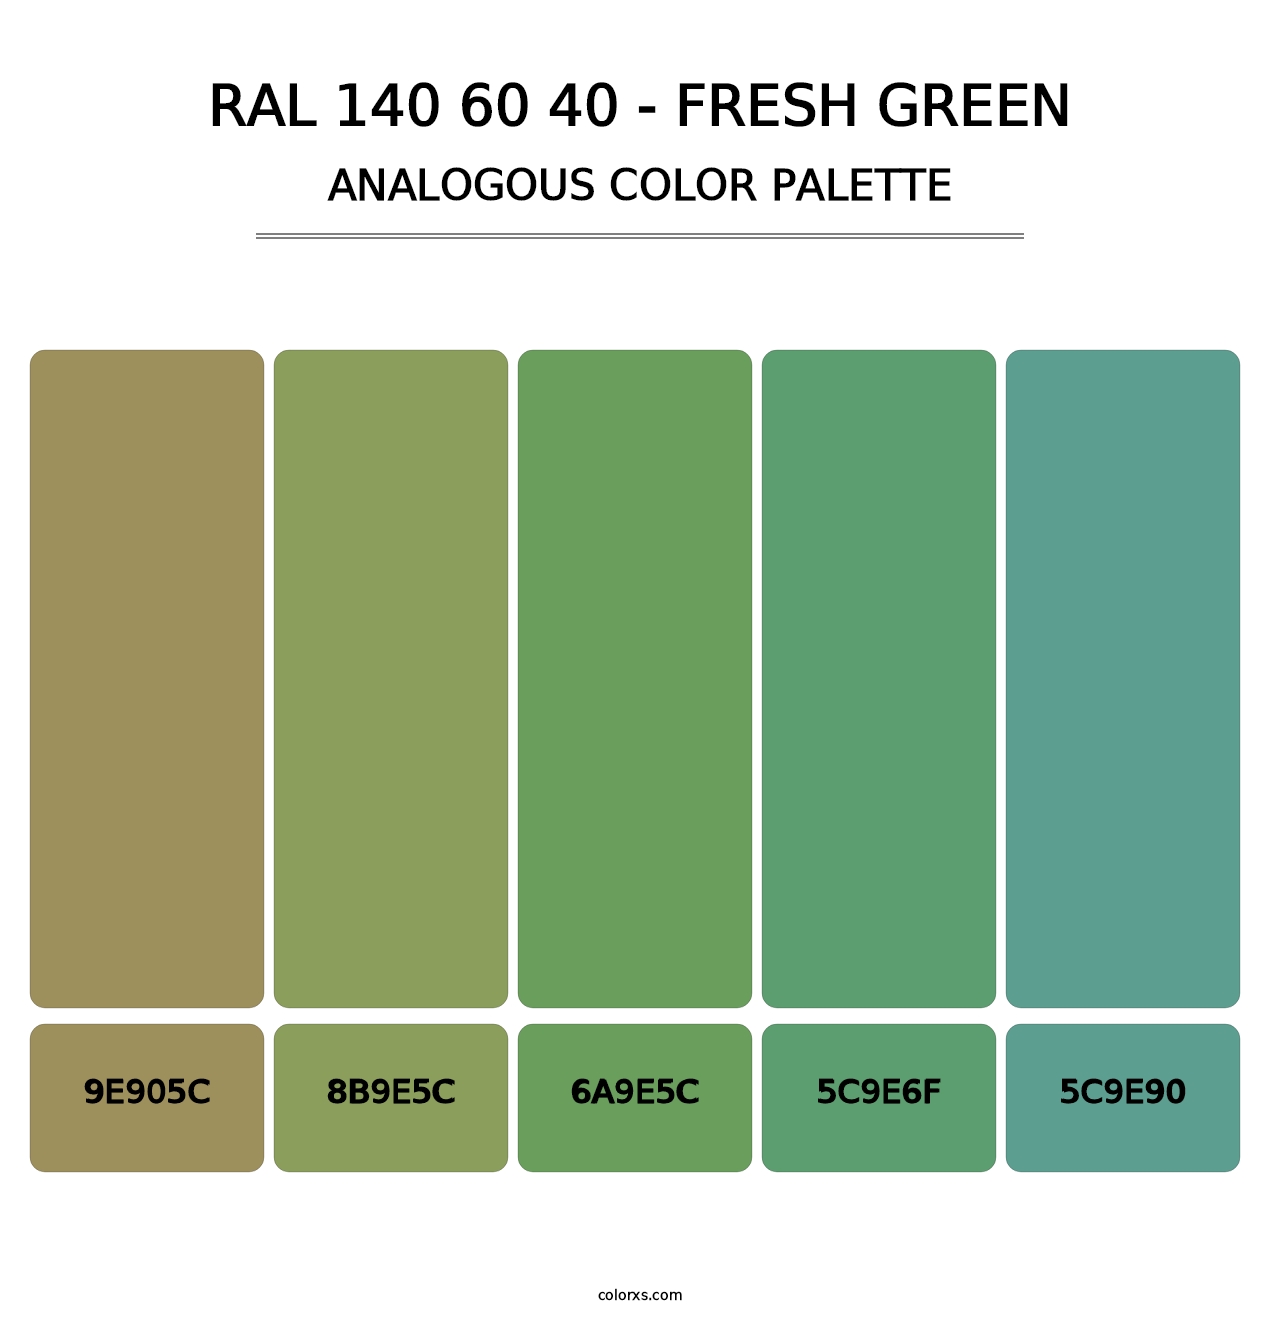 RAL 140 60 40 - Fresh Green - Analogous Color Palette